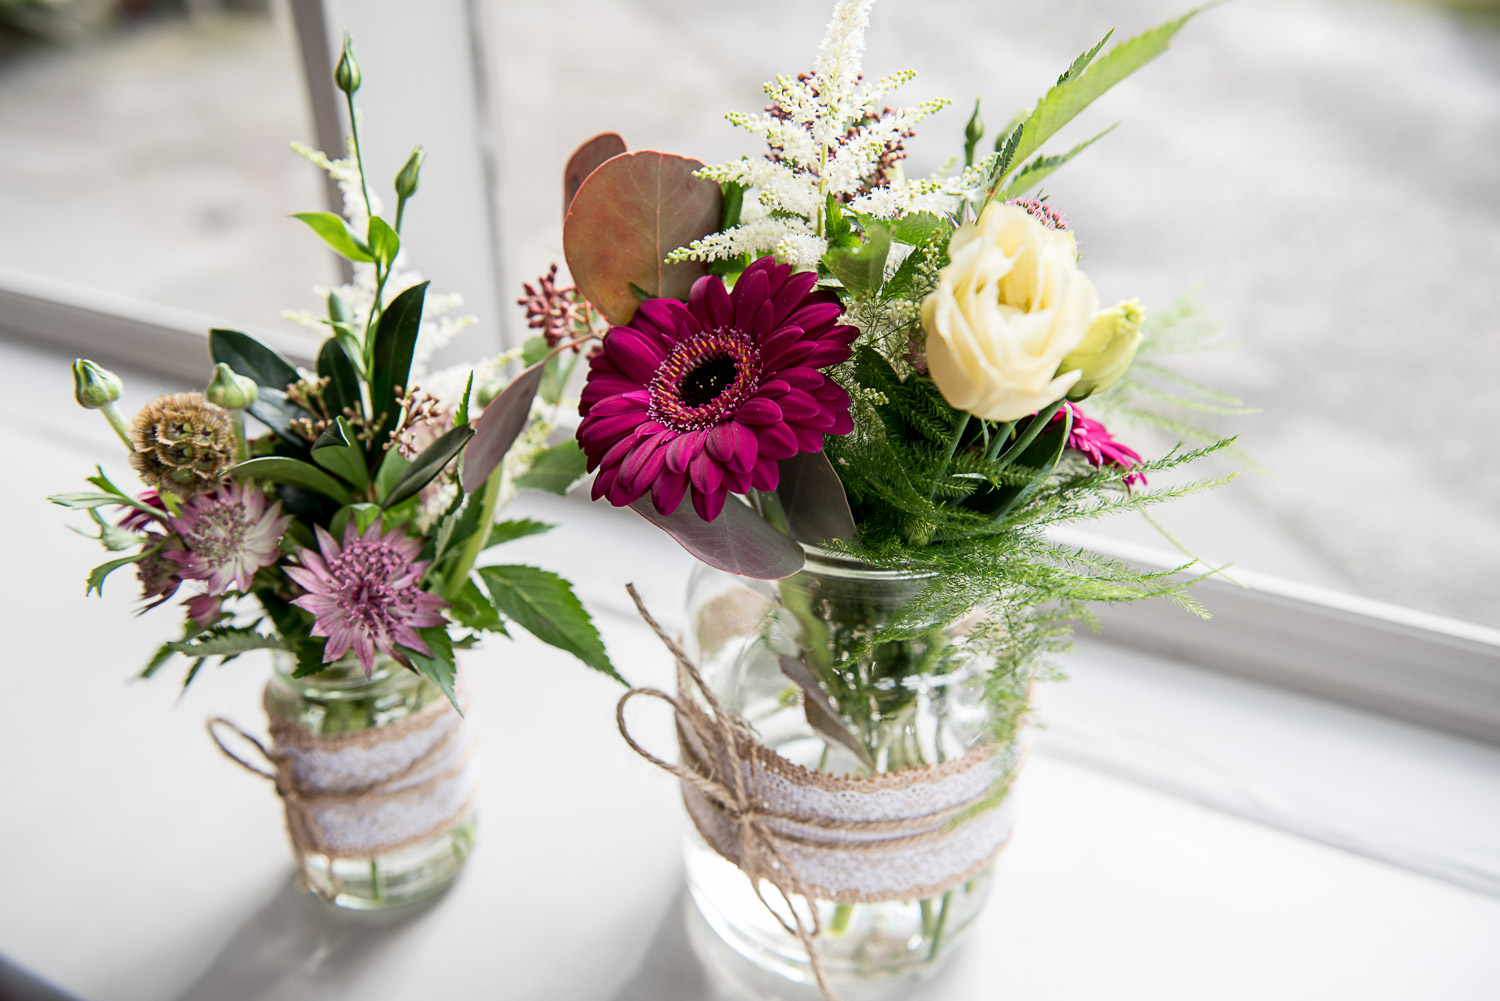 grassington-house-wedding-flowers.JPG